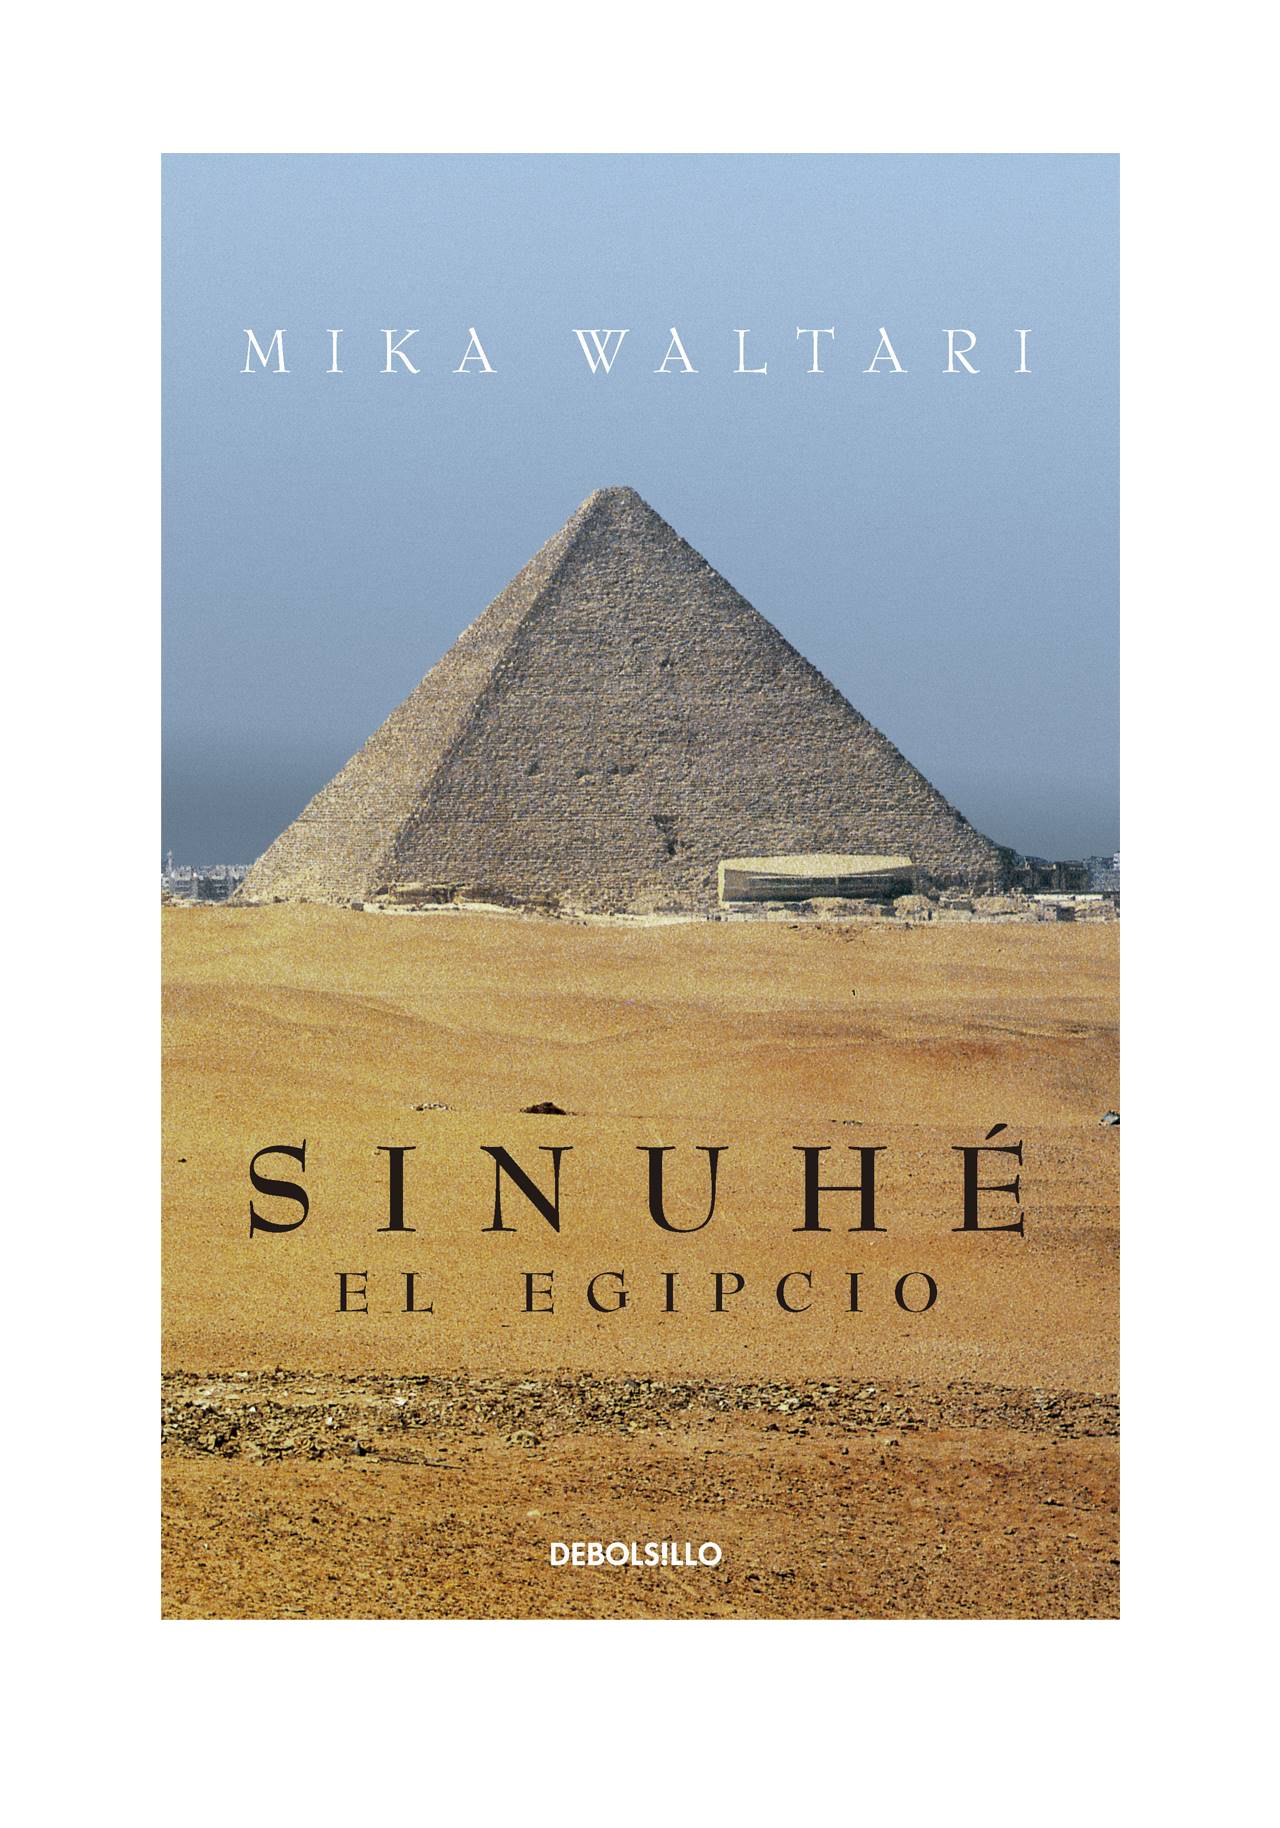 Novelas históricas imprescindibles: Sinuhé, el egipcio de Mika Waltari (2018, Debolsillo)